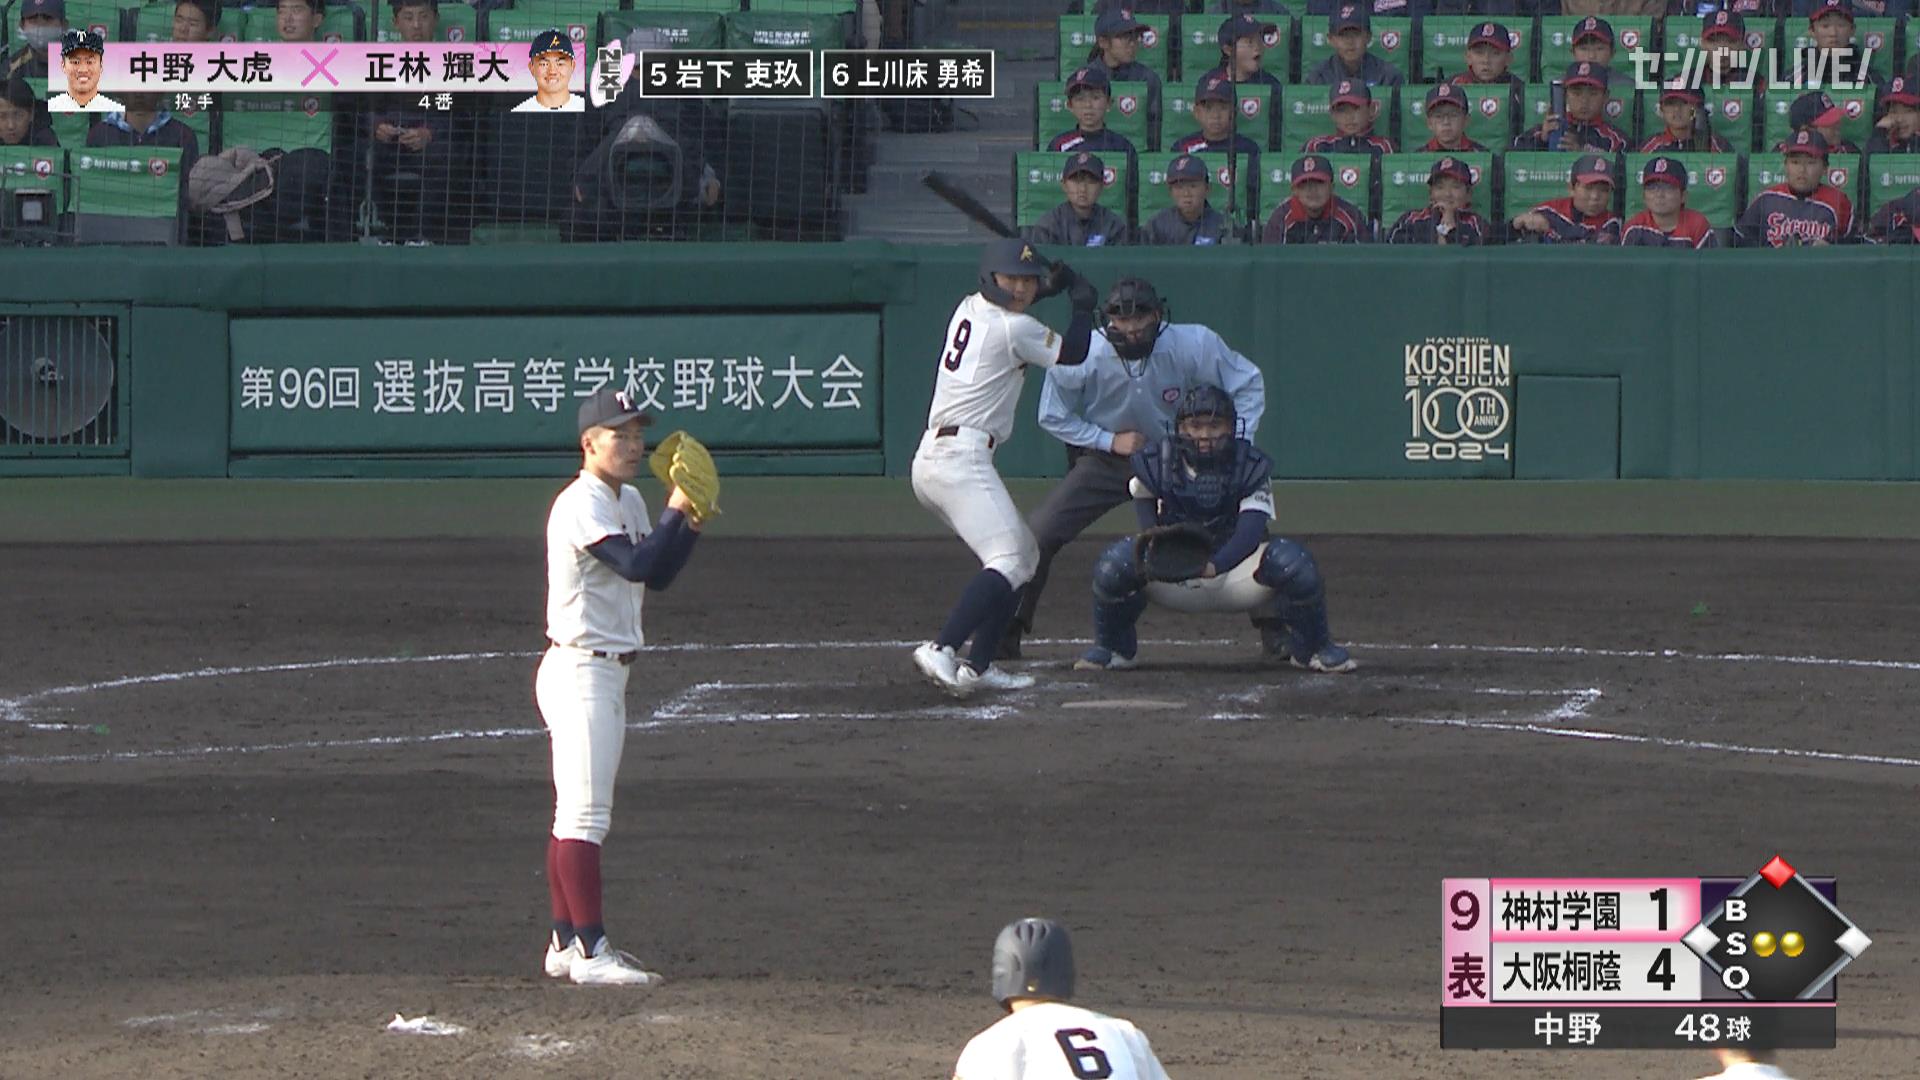 【センバツ高校野球】大阪桐蔭 - 神村学園 9回表 神村学園・正林 輝大の打席。無死、二塁、レフトへ適時打。